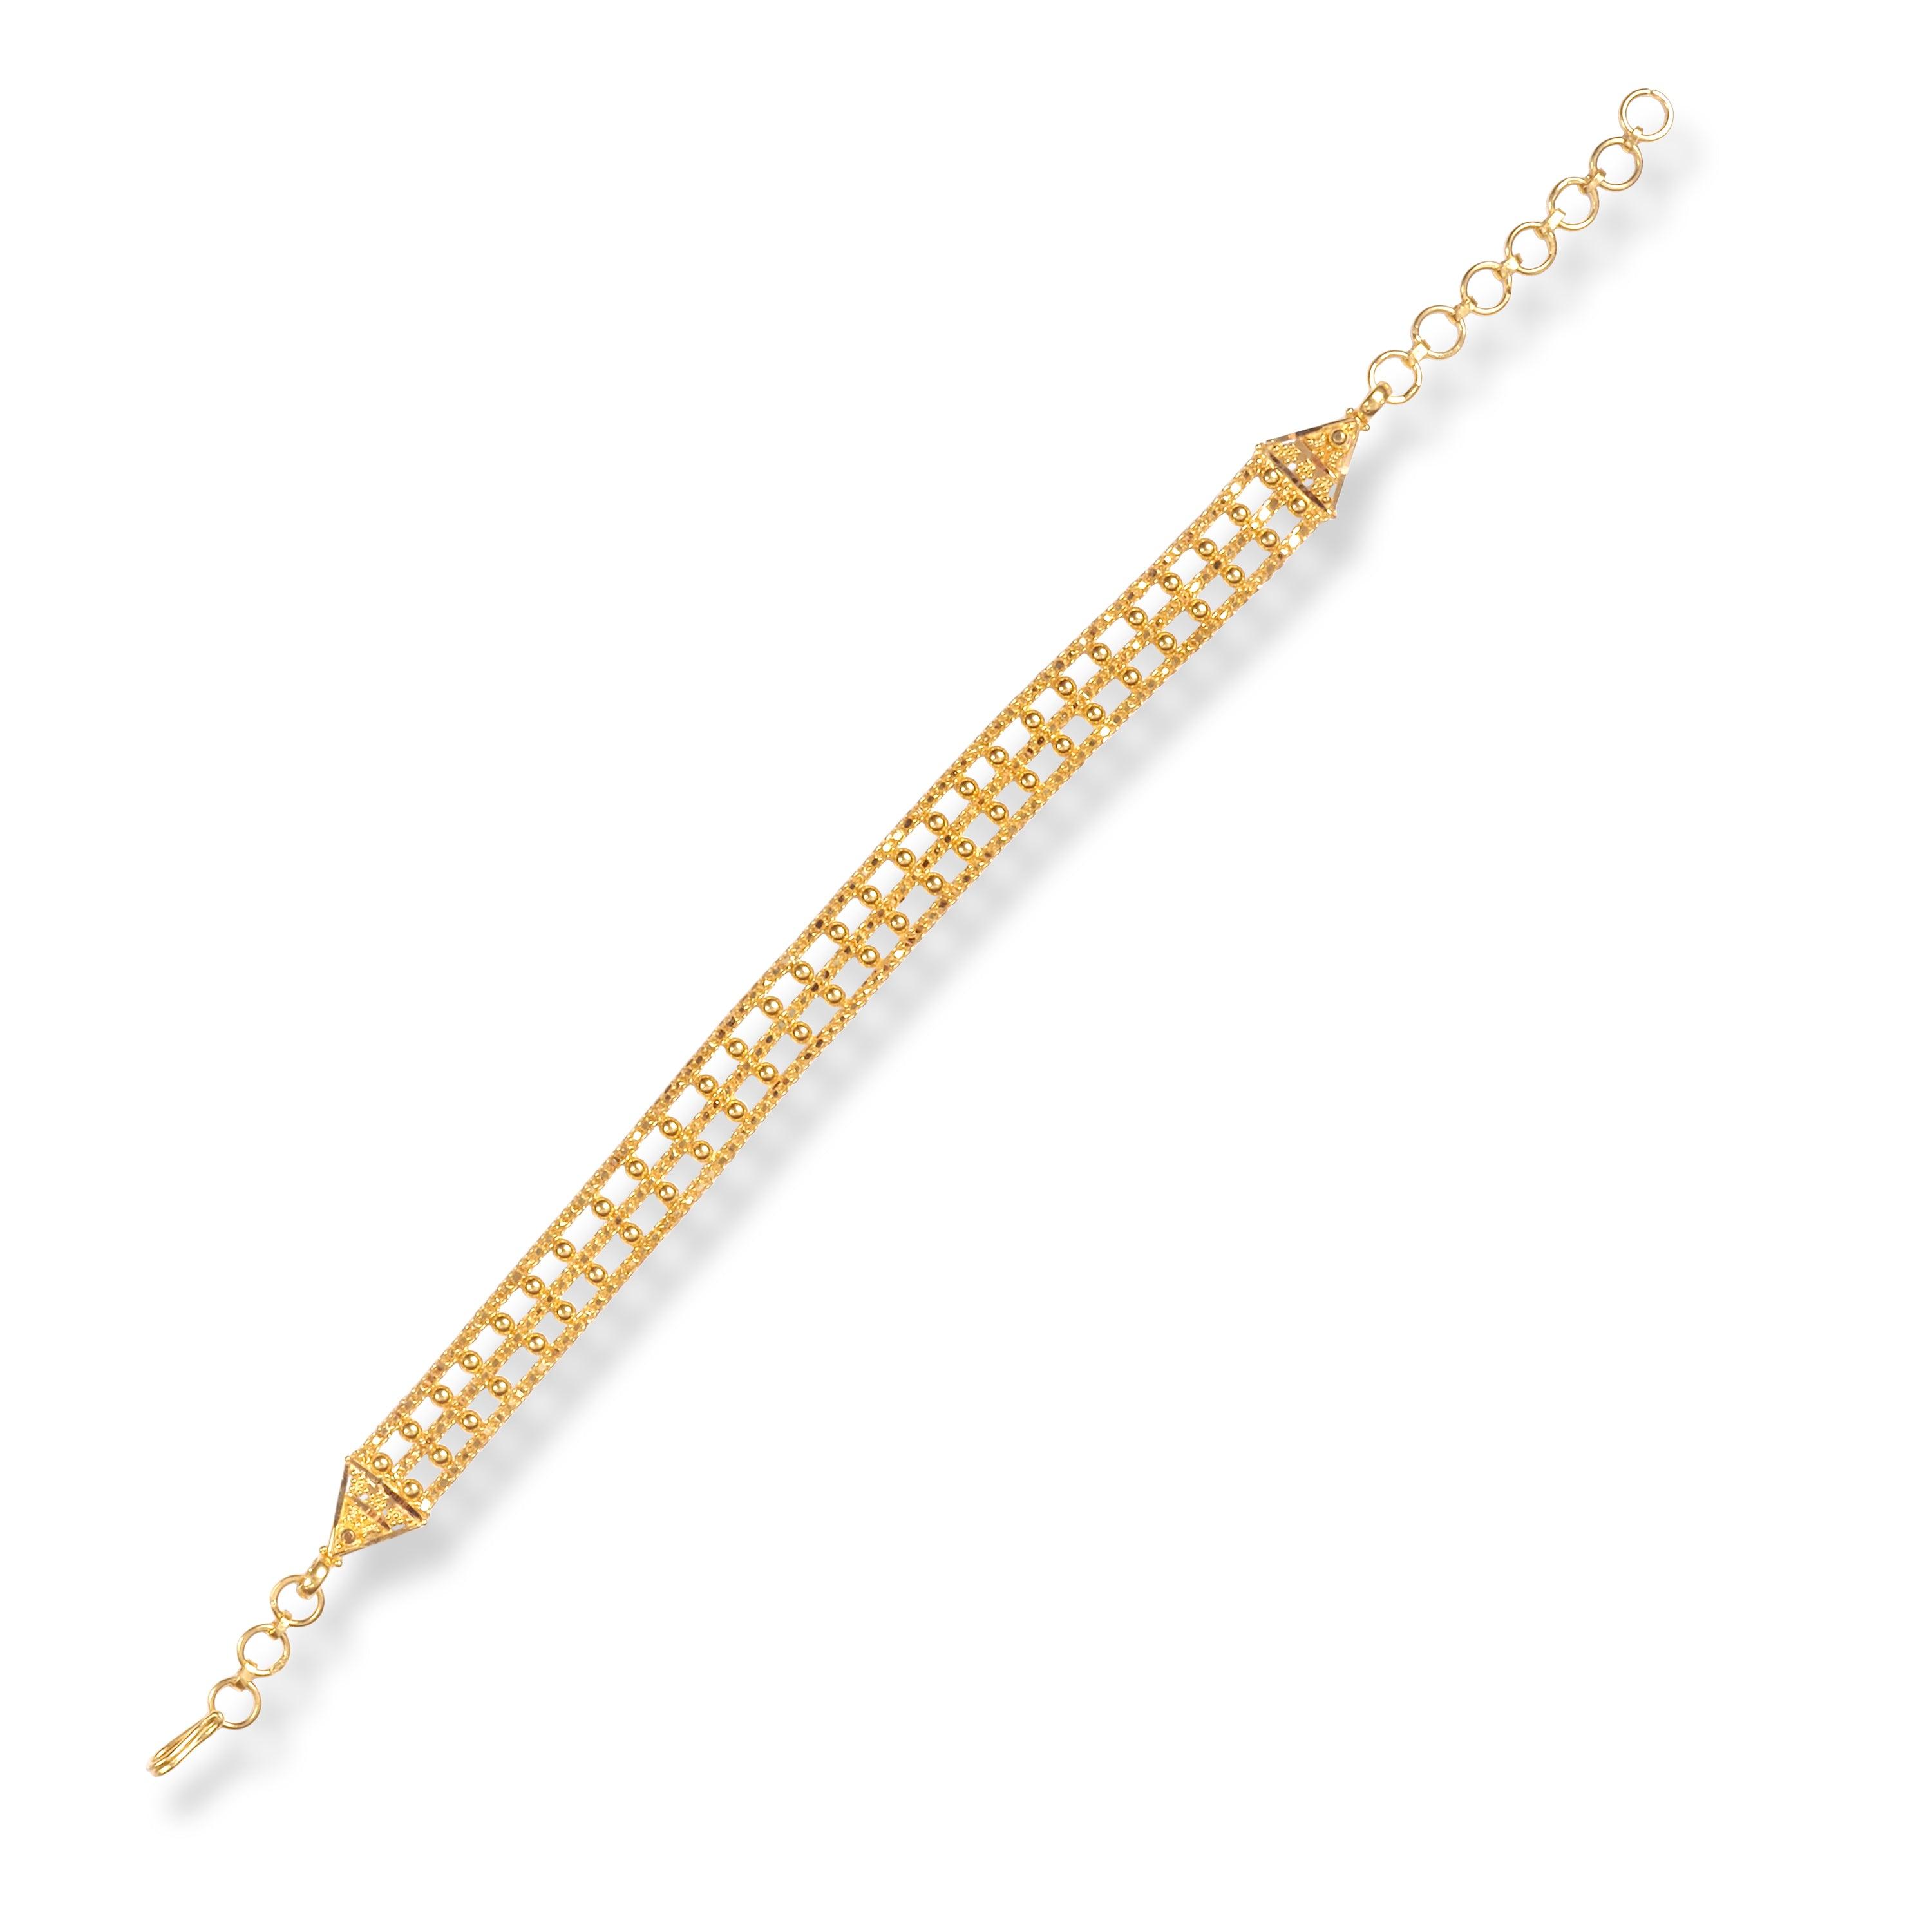 22ct Gold Ladies Bracelet in Three Row Design with U Hook Clasp LBR-7149 - Minar Jewellers